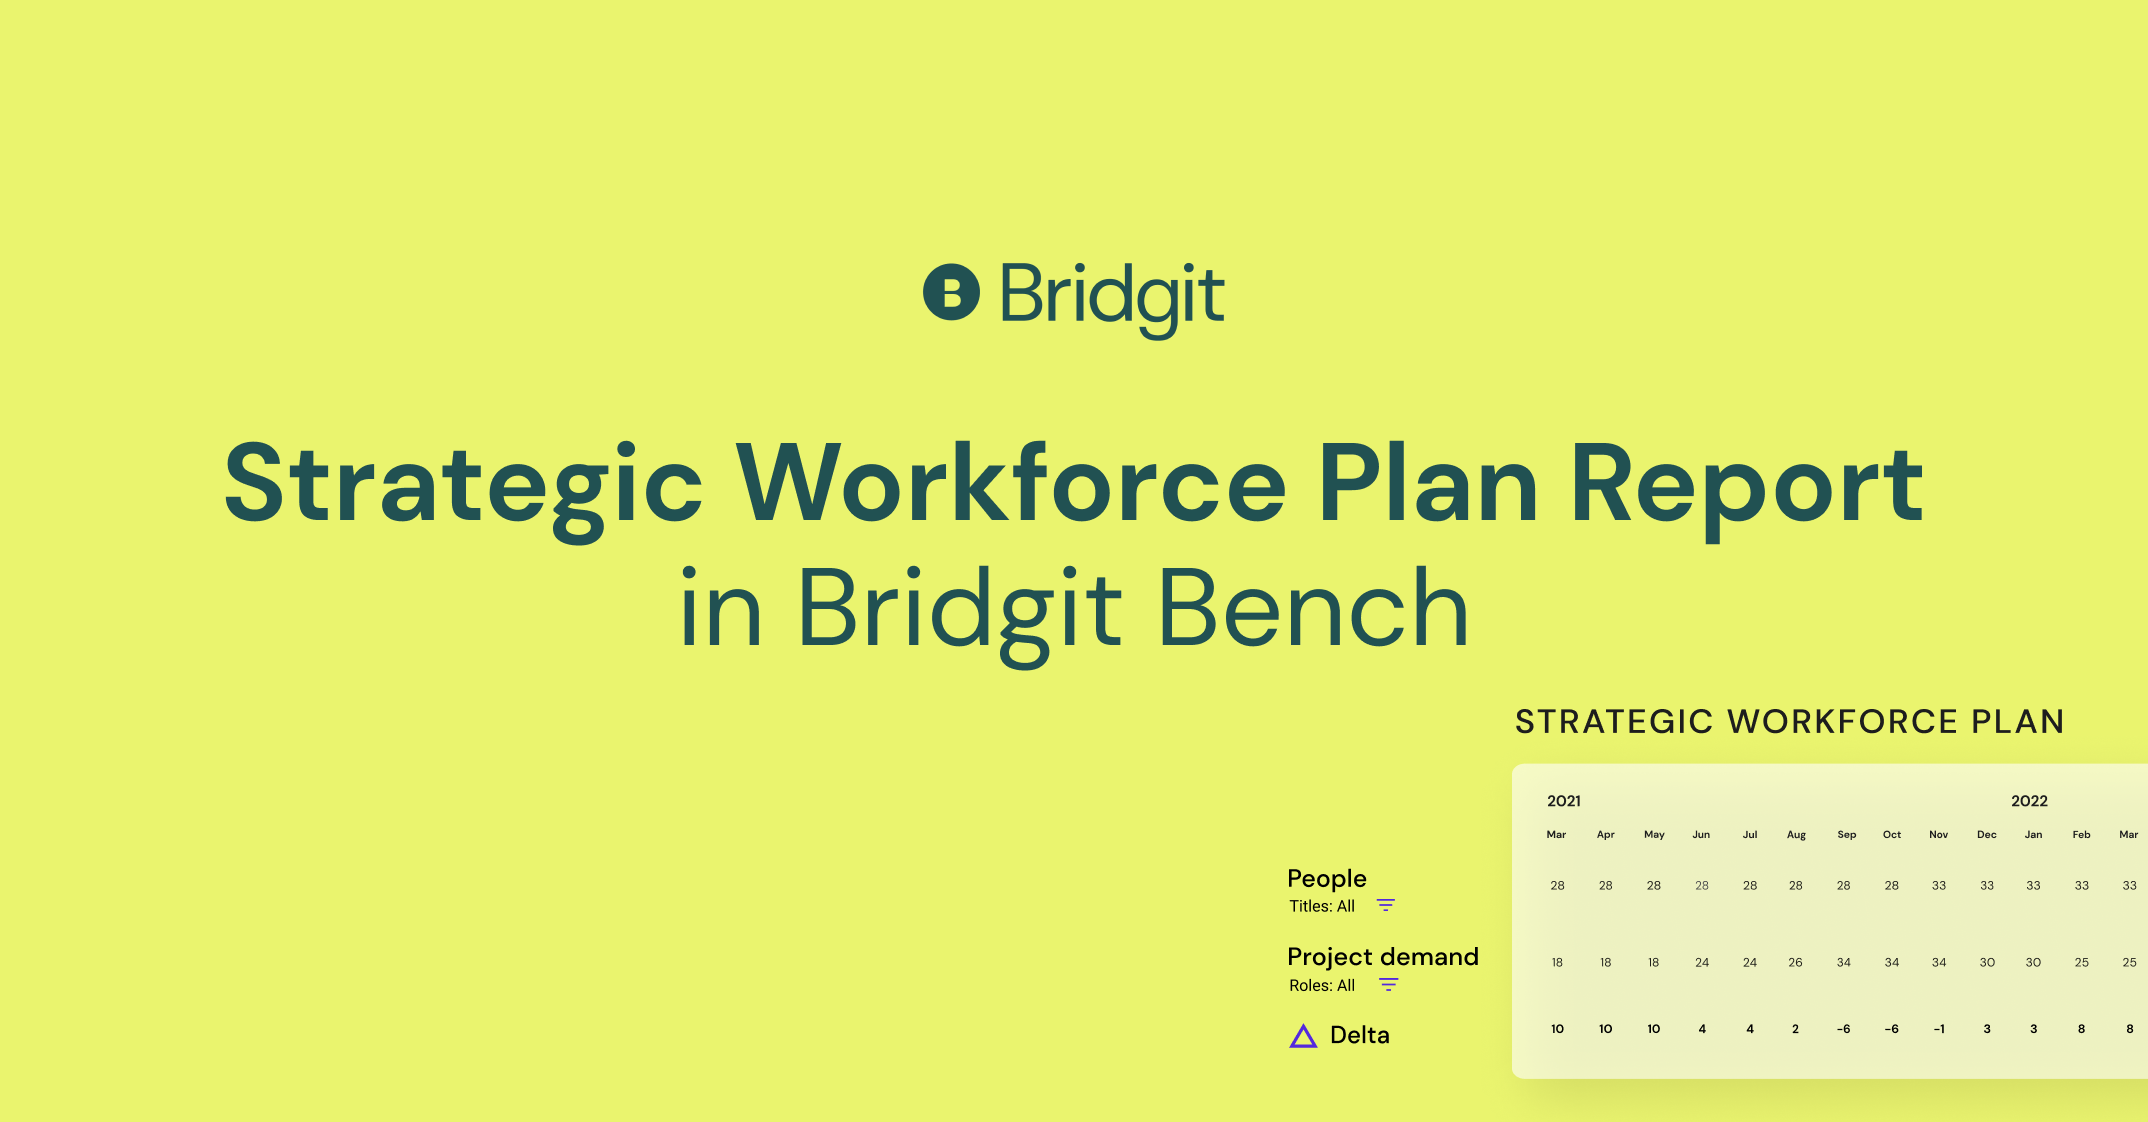 Strategic Workforce Plan Report in Bridgit Bench